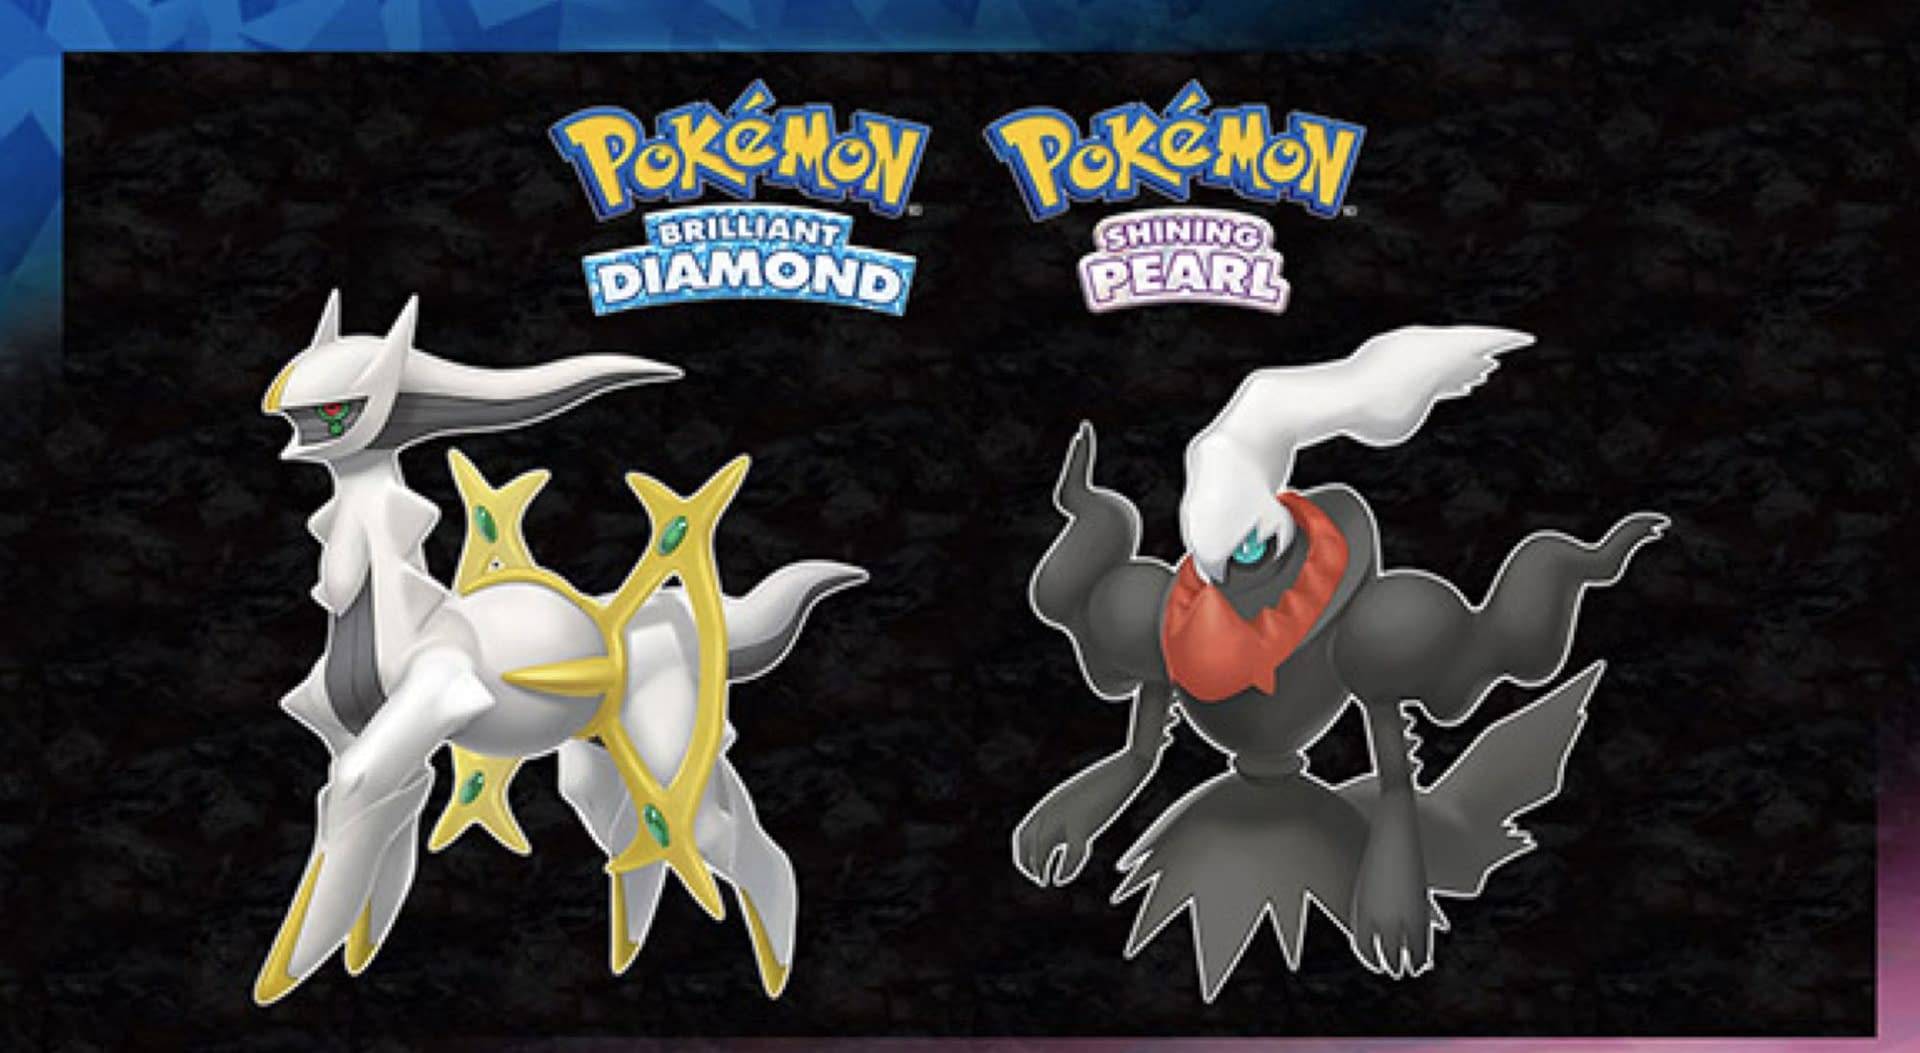 Pokémon Brilliant Diamond Shining Pearl version differences, exclusive  Pokémon and new features